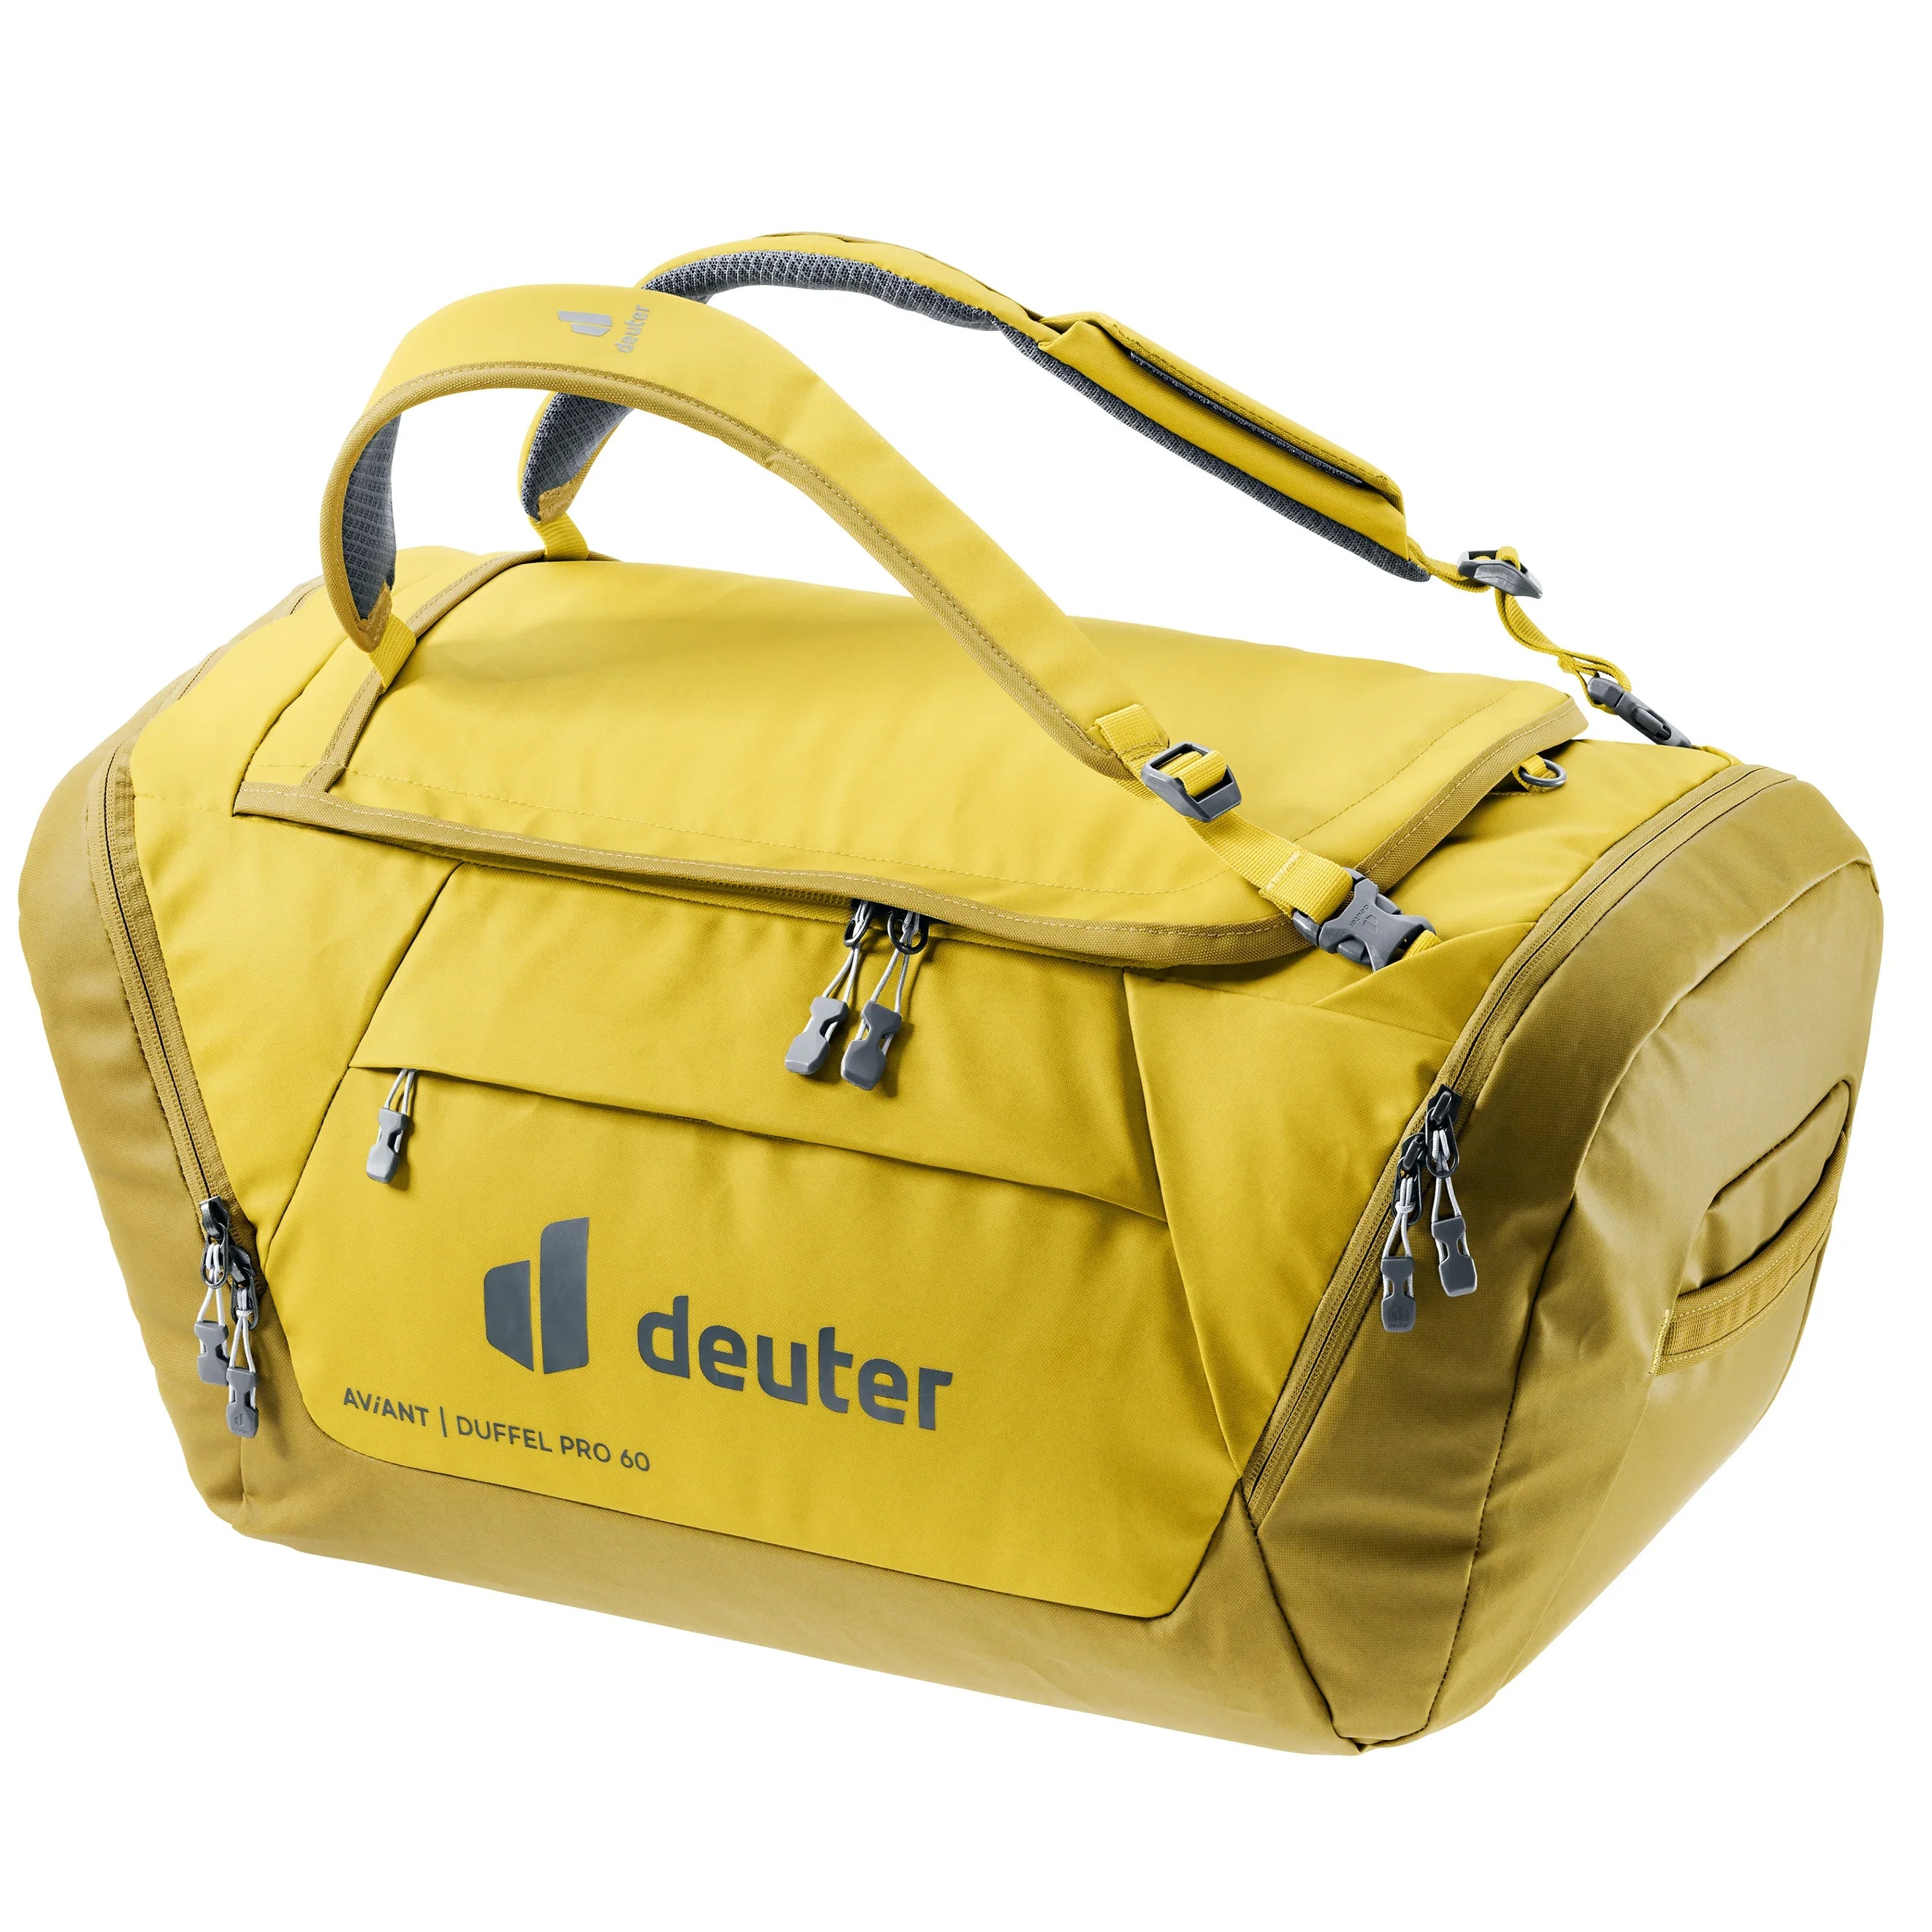 Deuter Travel Aviant Duffel Pro 60 sac de voyage 66 cm - maïs-curcuma